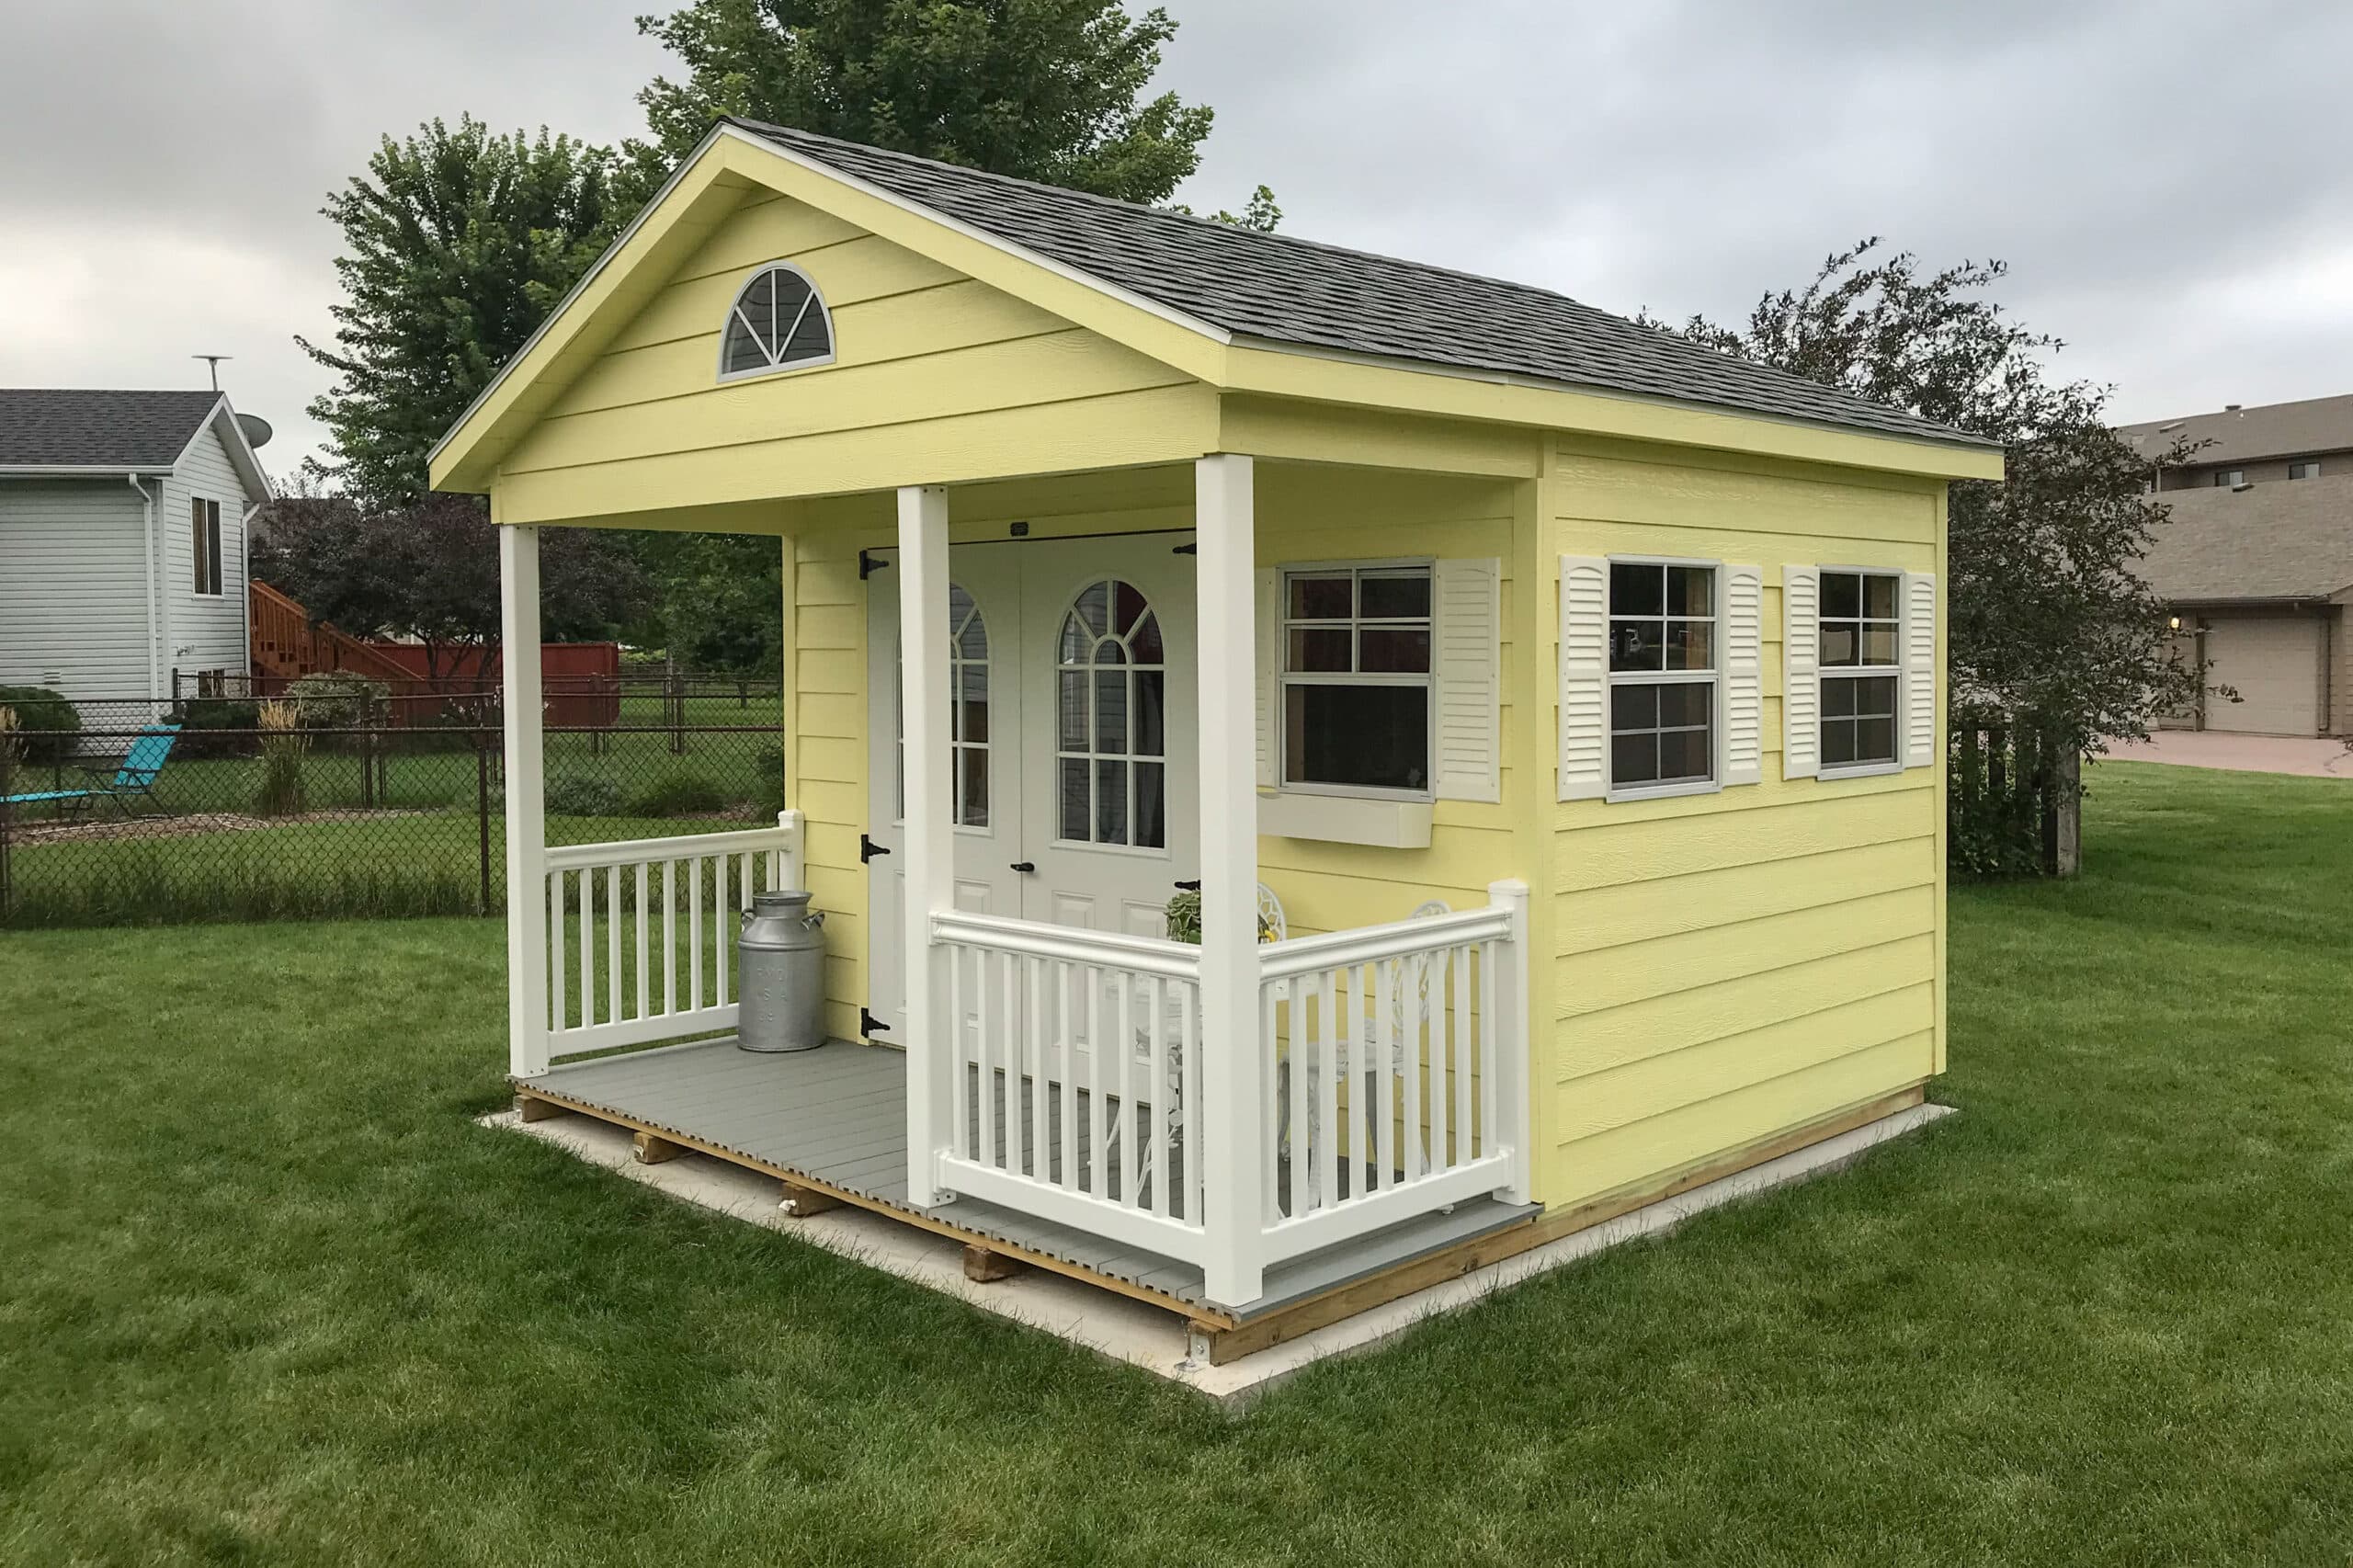 Yellow playhouse storage shed in backyard